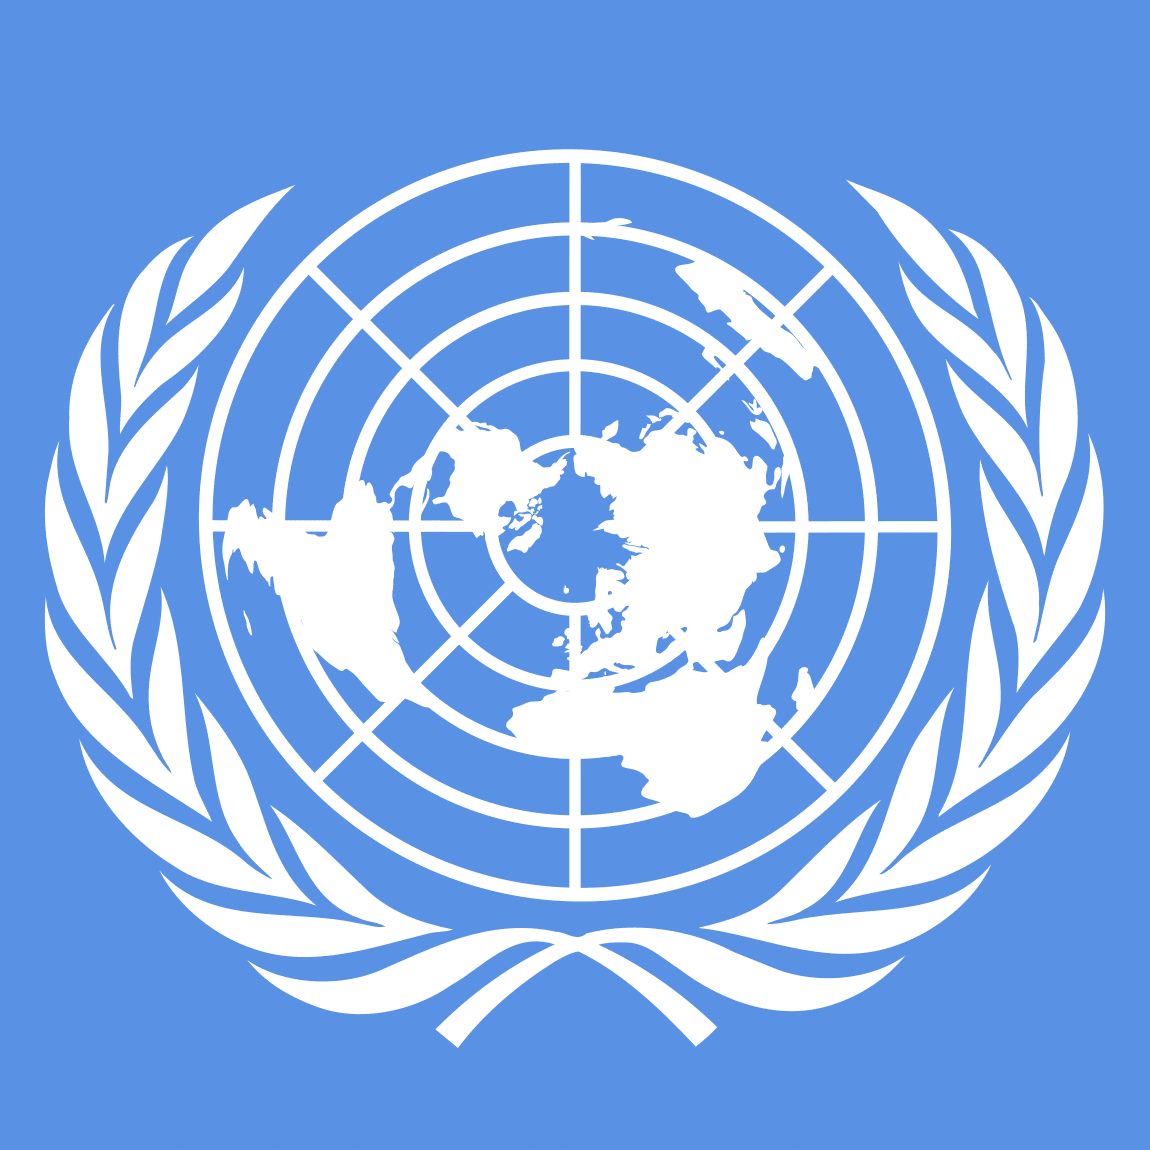 UN High Commissioner for Refugees